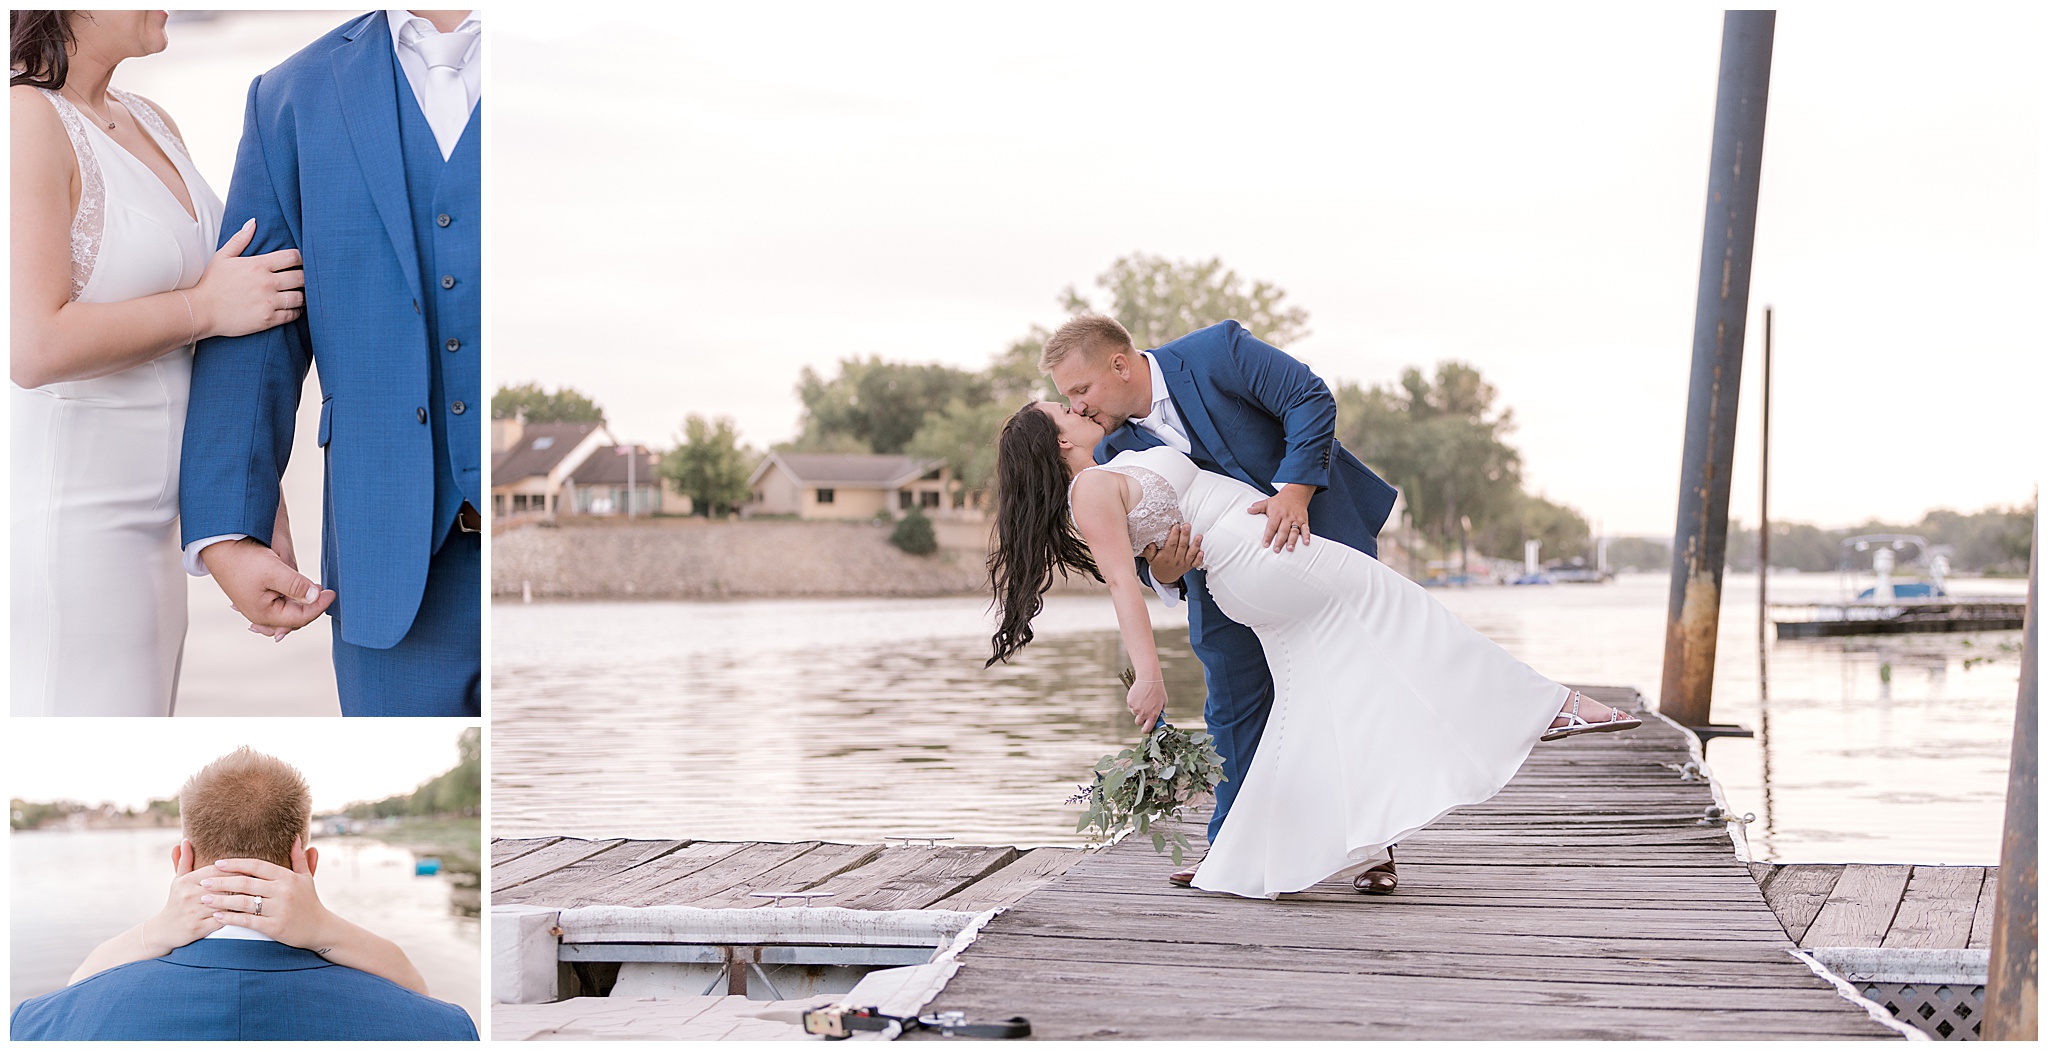 Celebrations on the River Wedding | La Crosse, WI